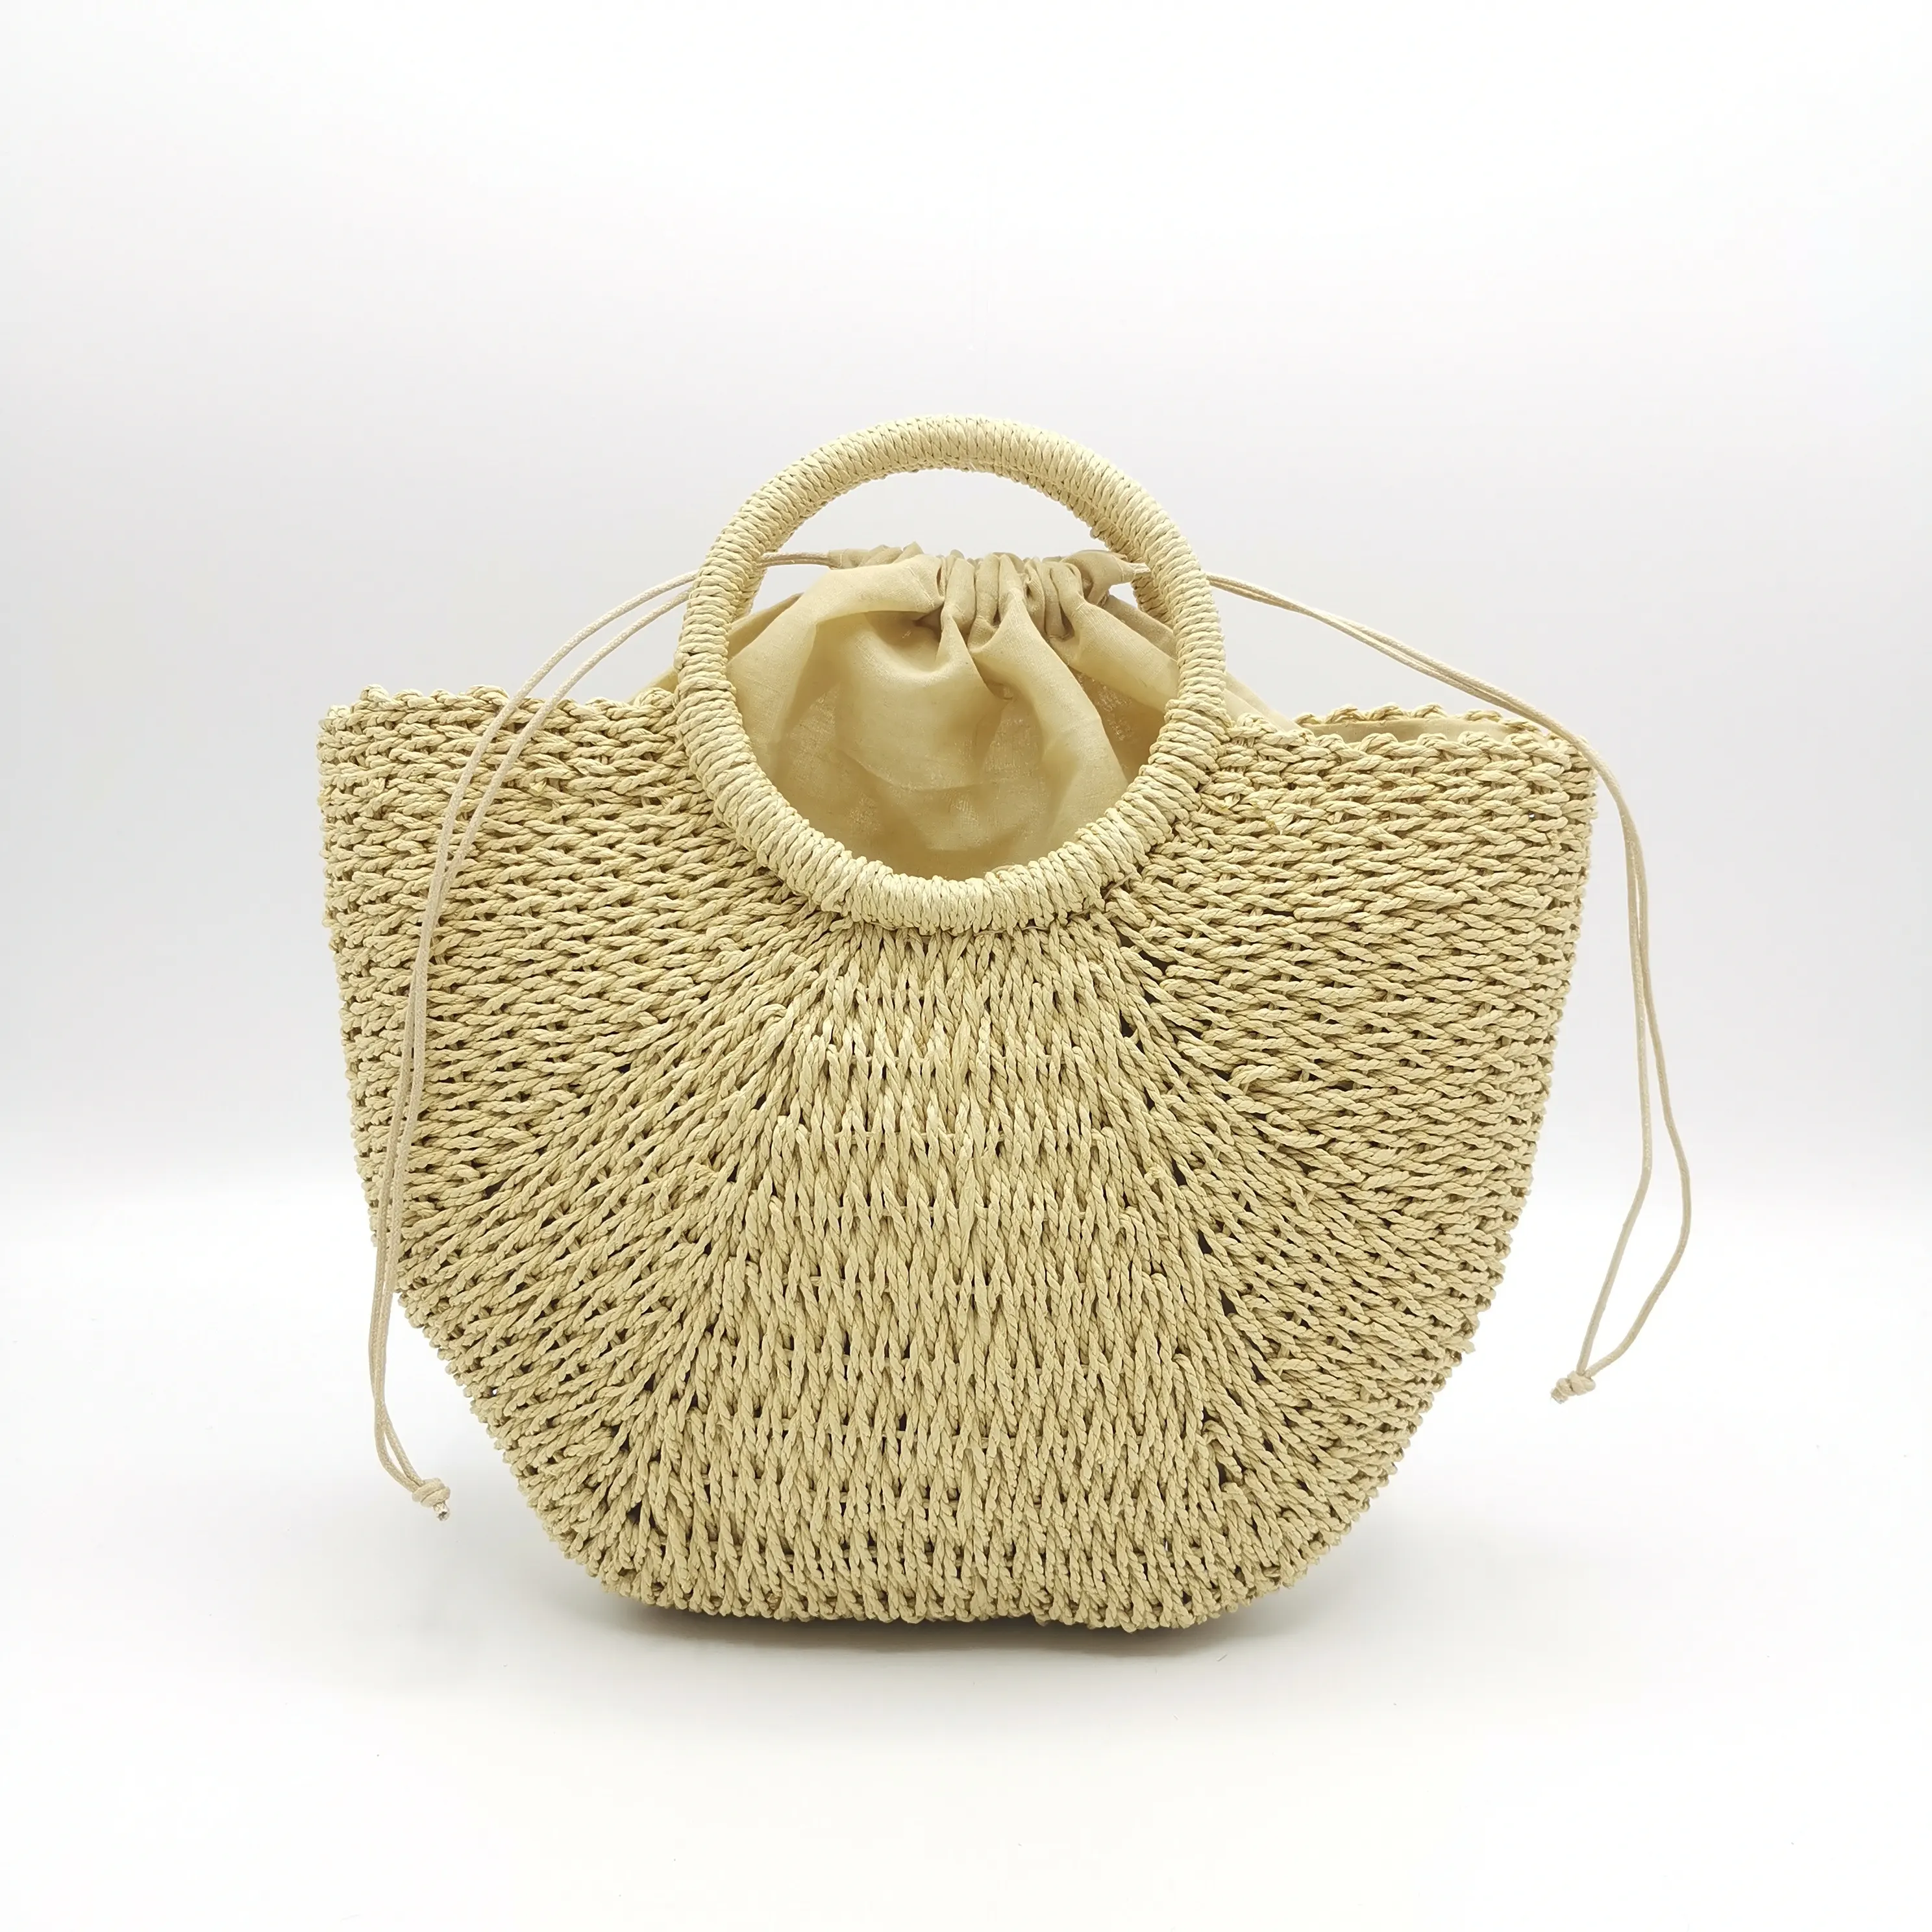 Straw Tote Bag Summer Beach Bag Handmade Straw Woven Handbag For Women Travel